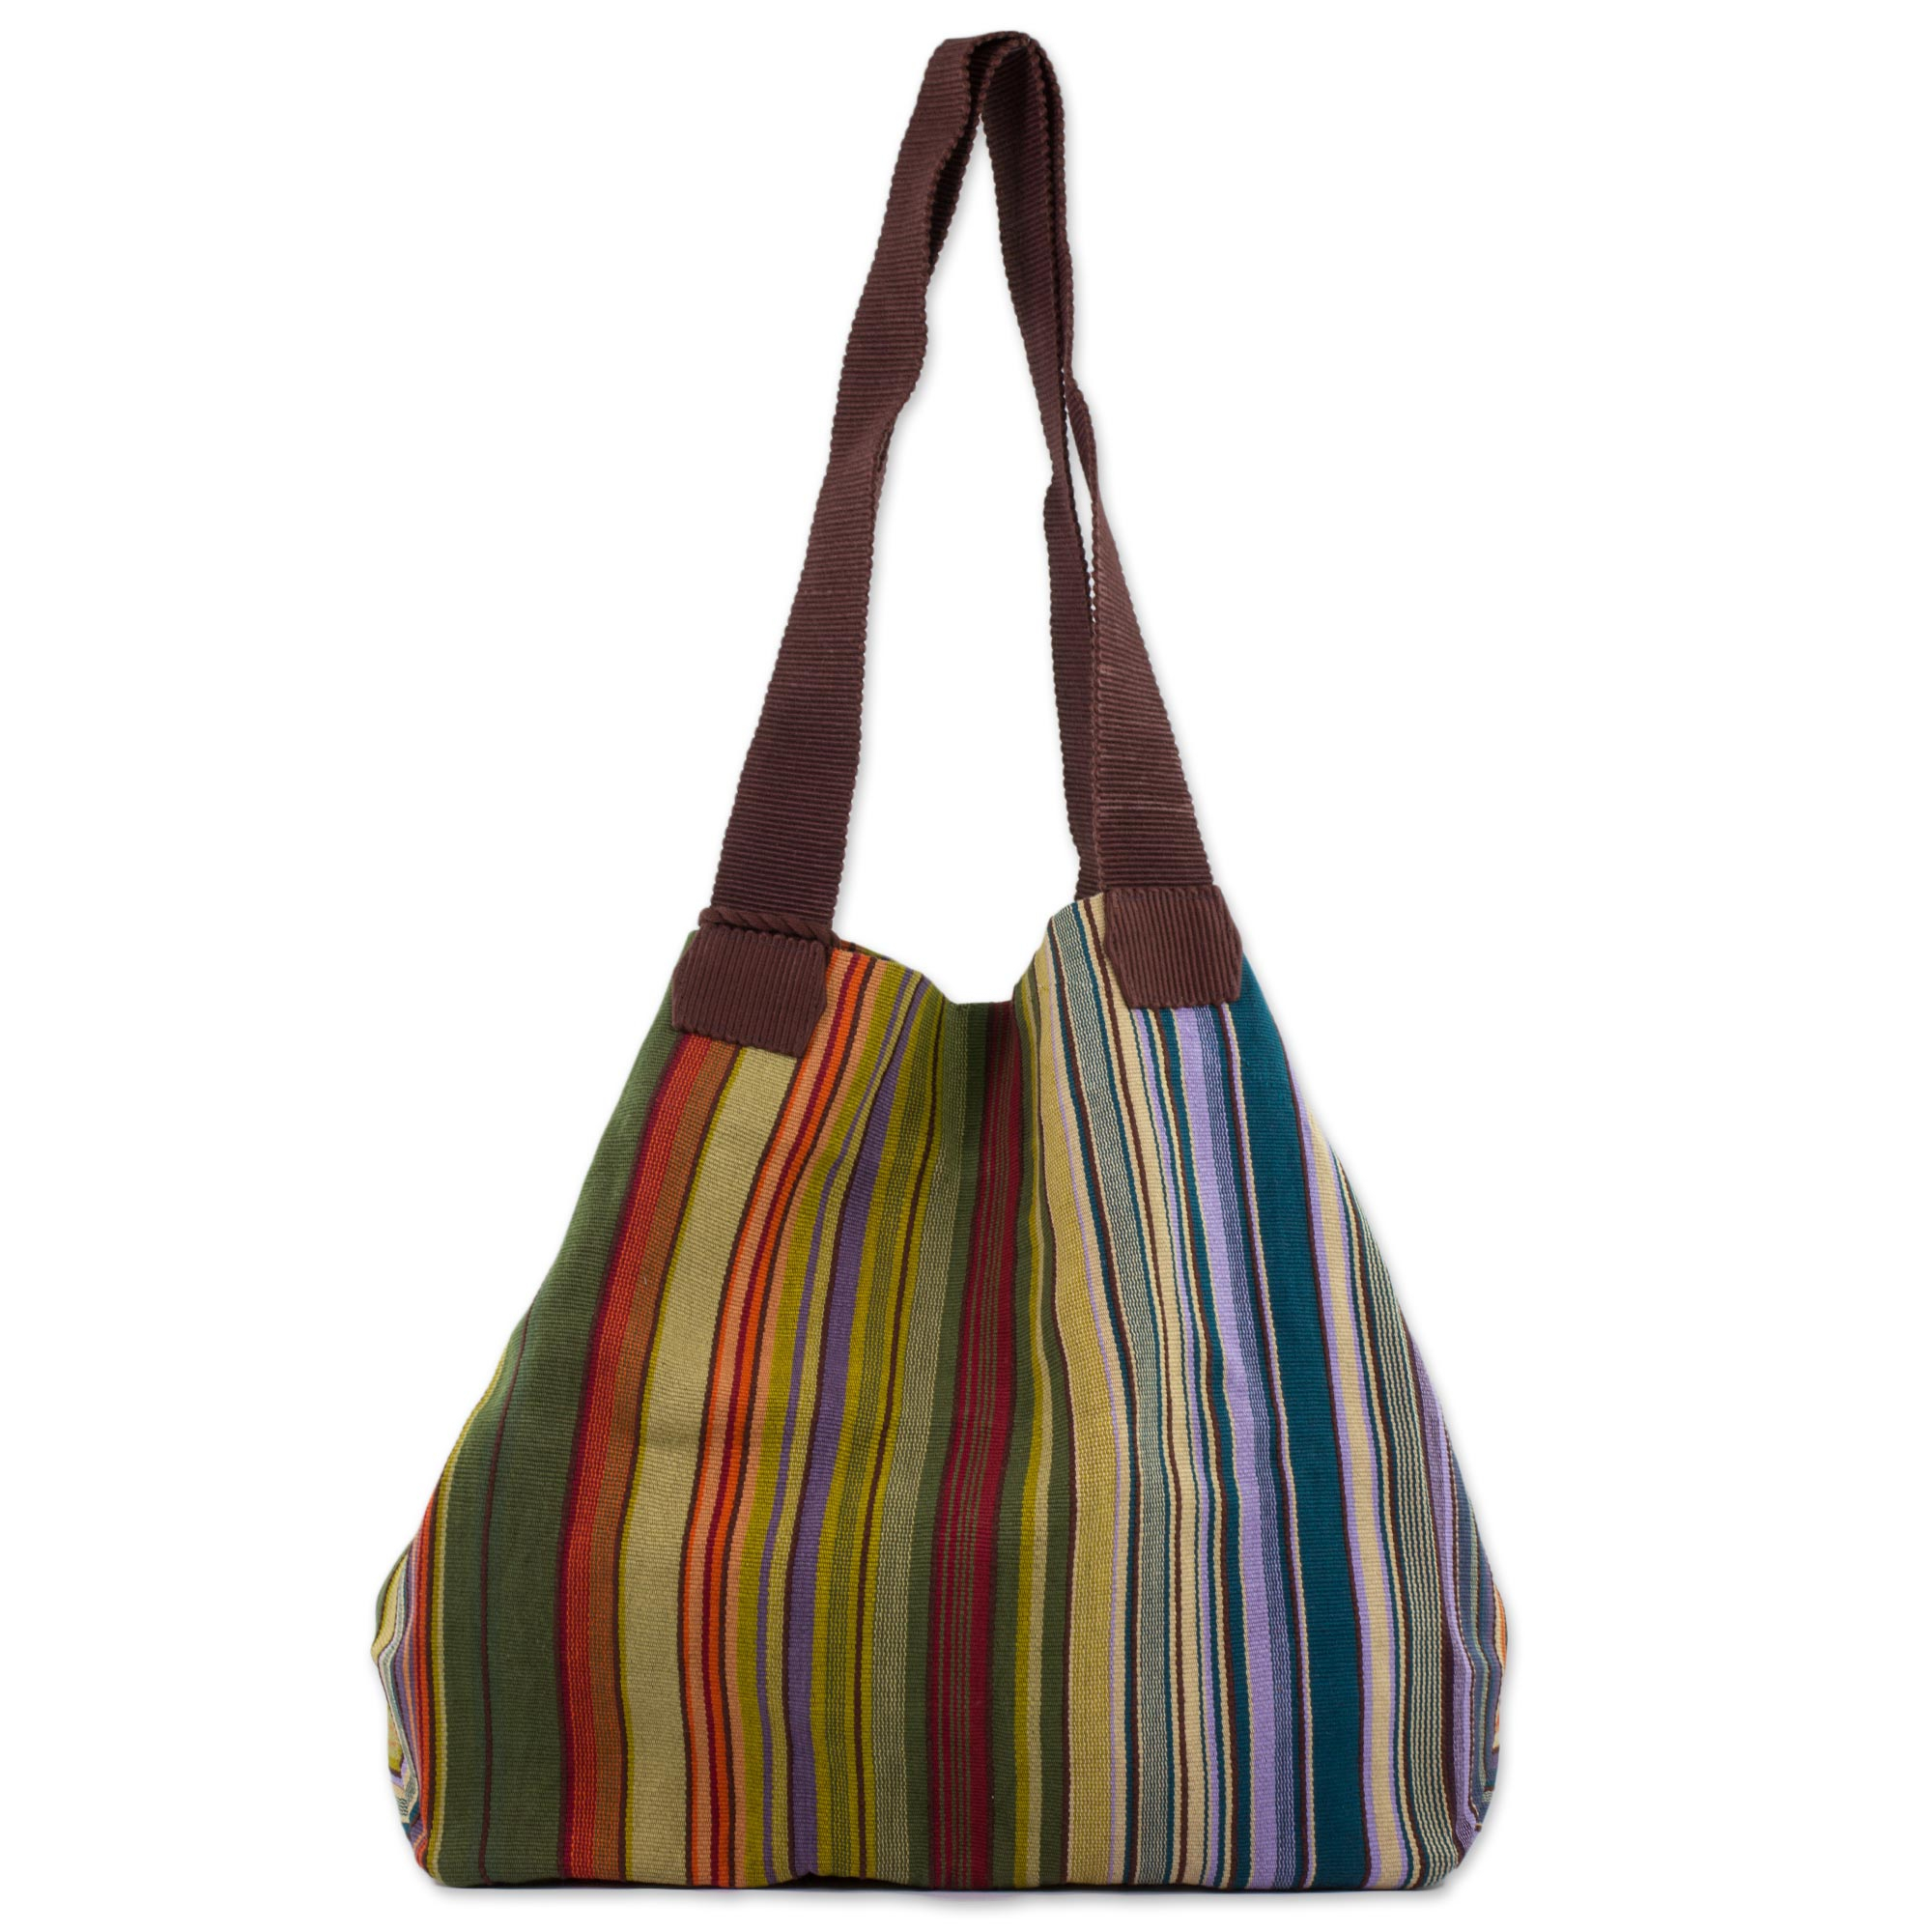 100% Cotton Handwoven Colorful Striped Tote Handbag - Earth and Sky ...